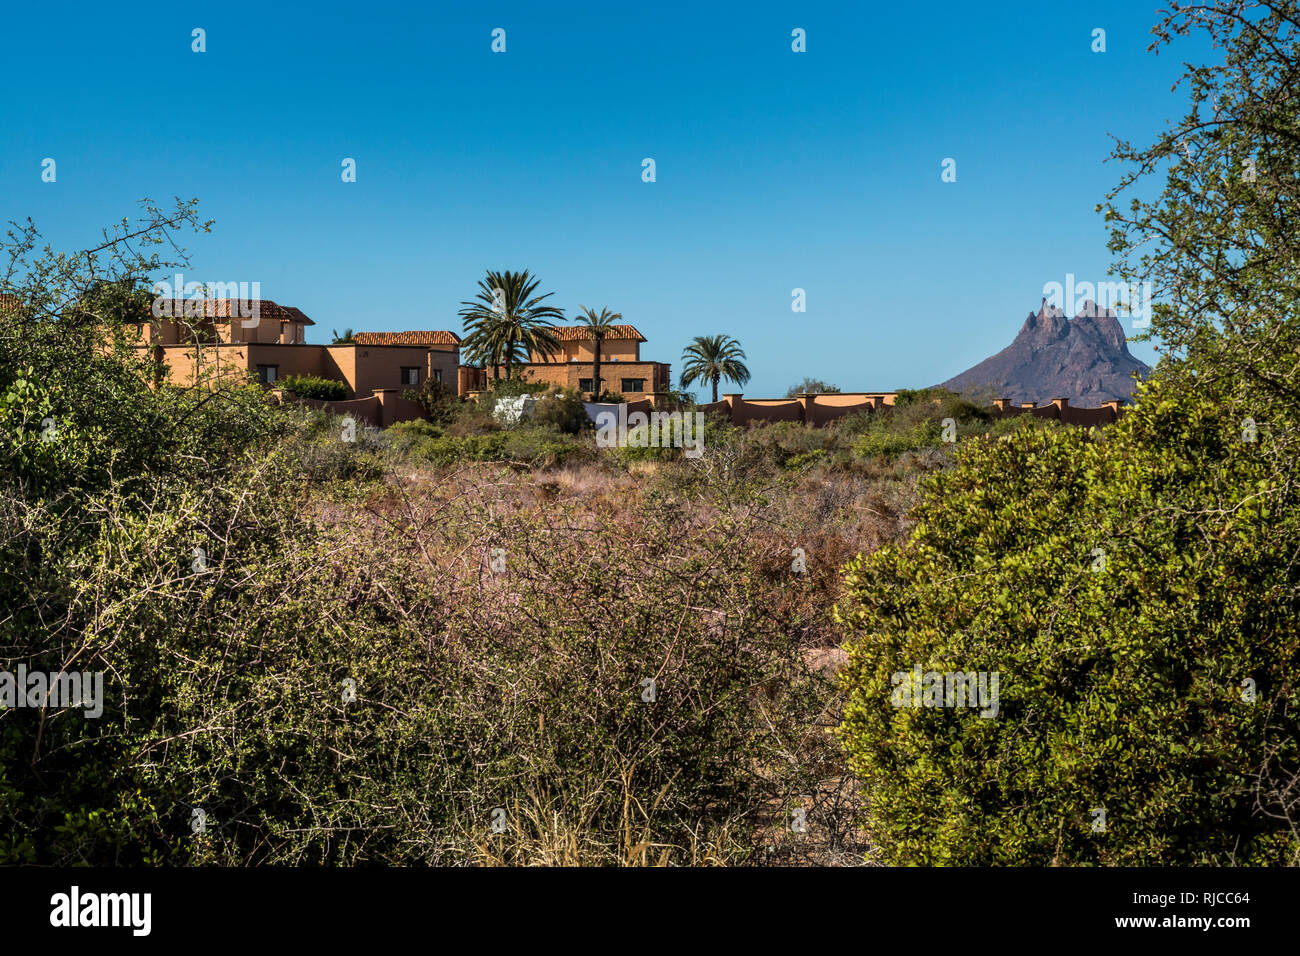 Vacation condo development near Mount Tetakawi, Sonora, Mexico Stock Photo